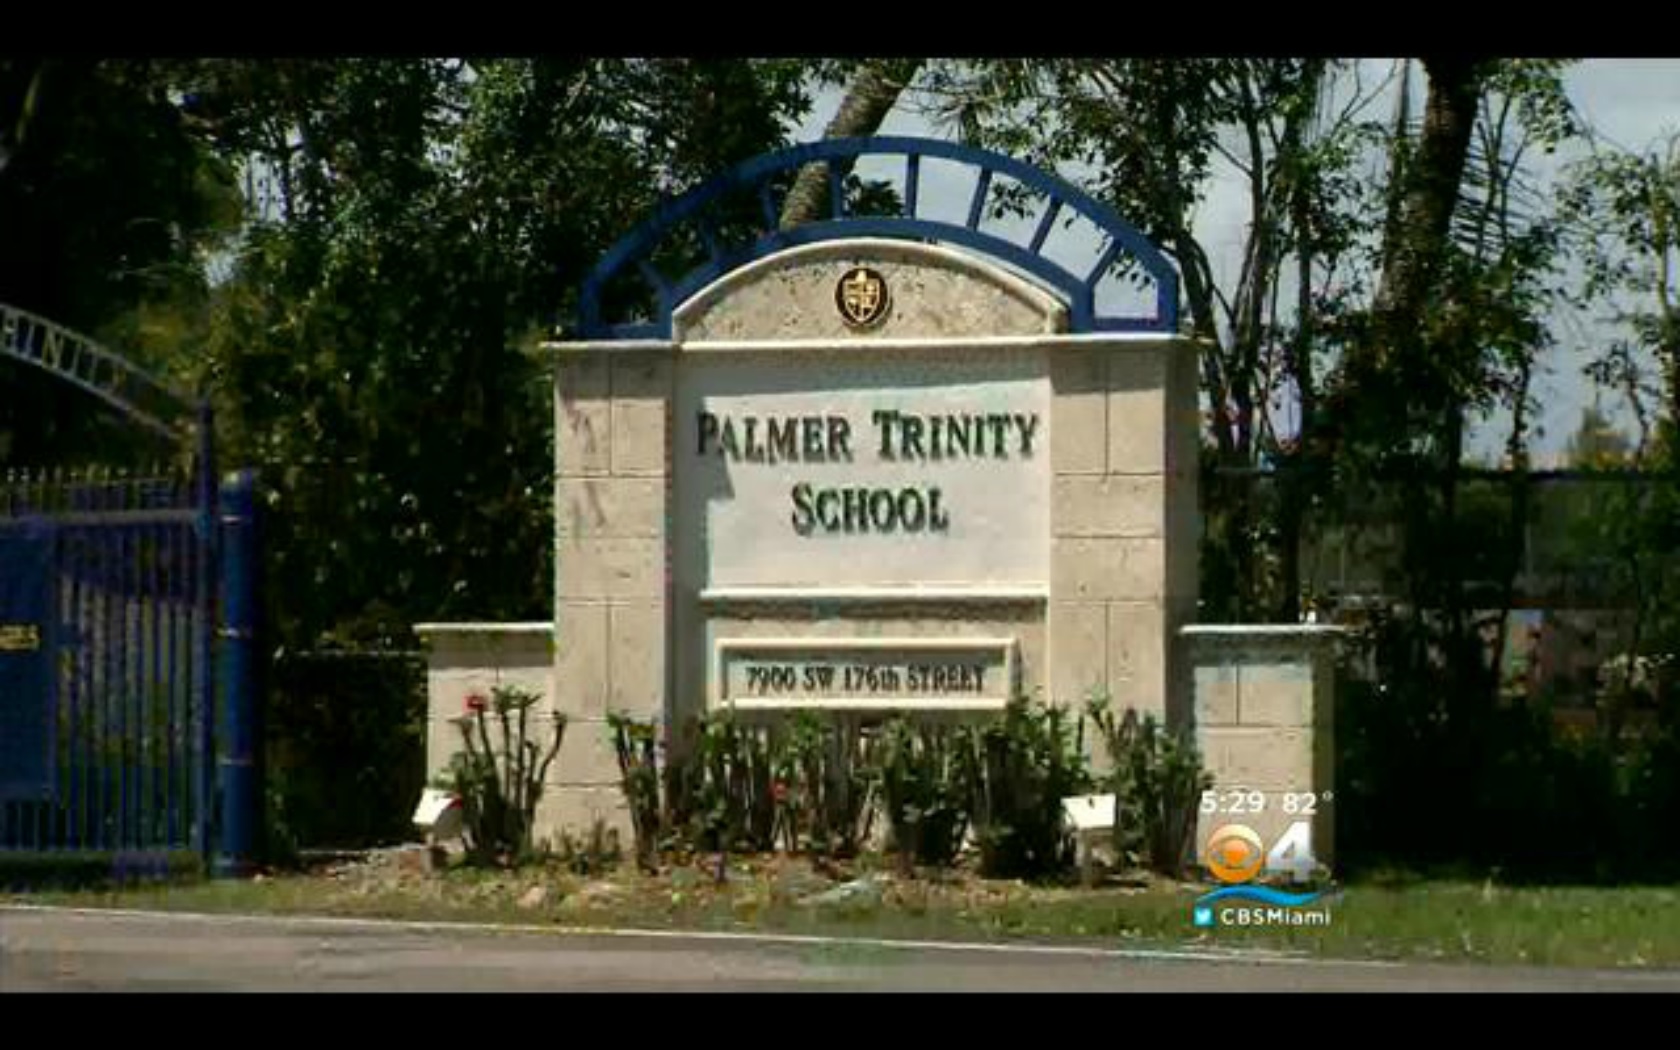 miami-florida-private-school-palmer-trinity-sued-for-bullying